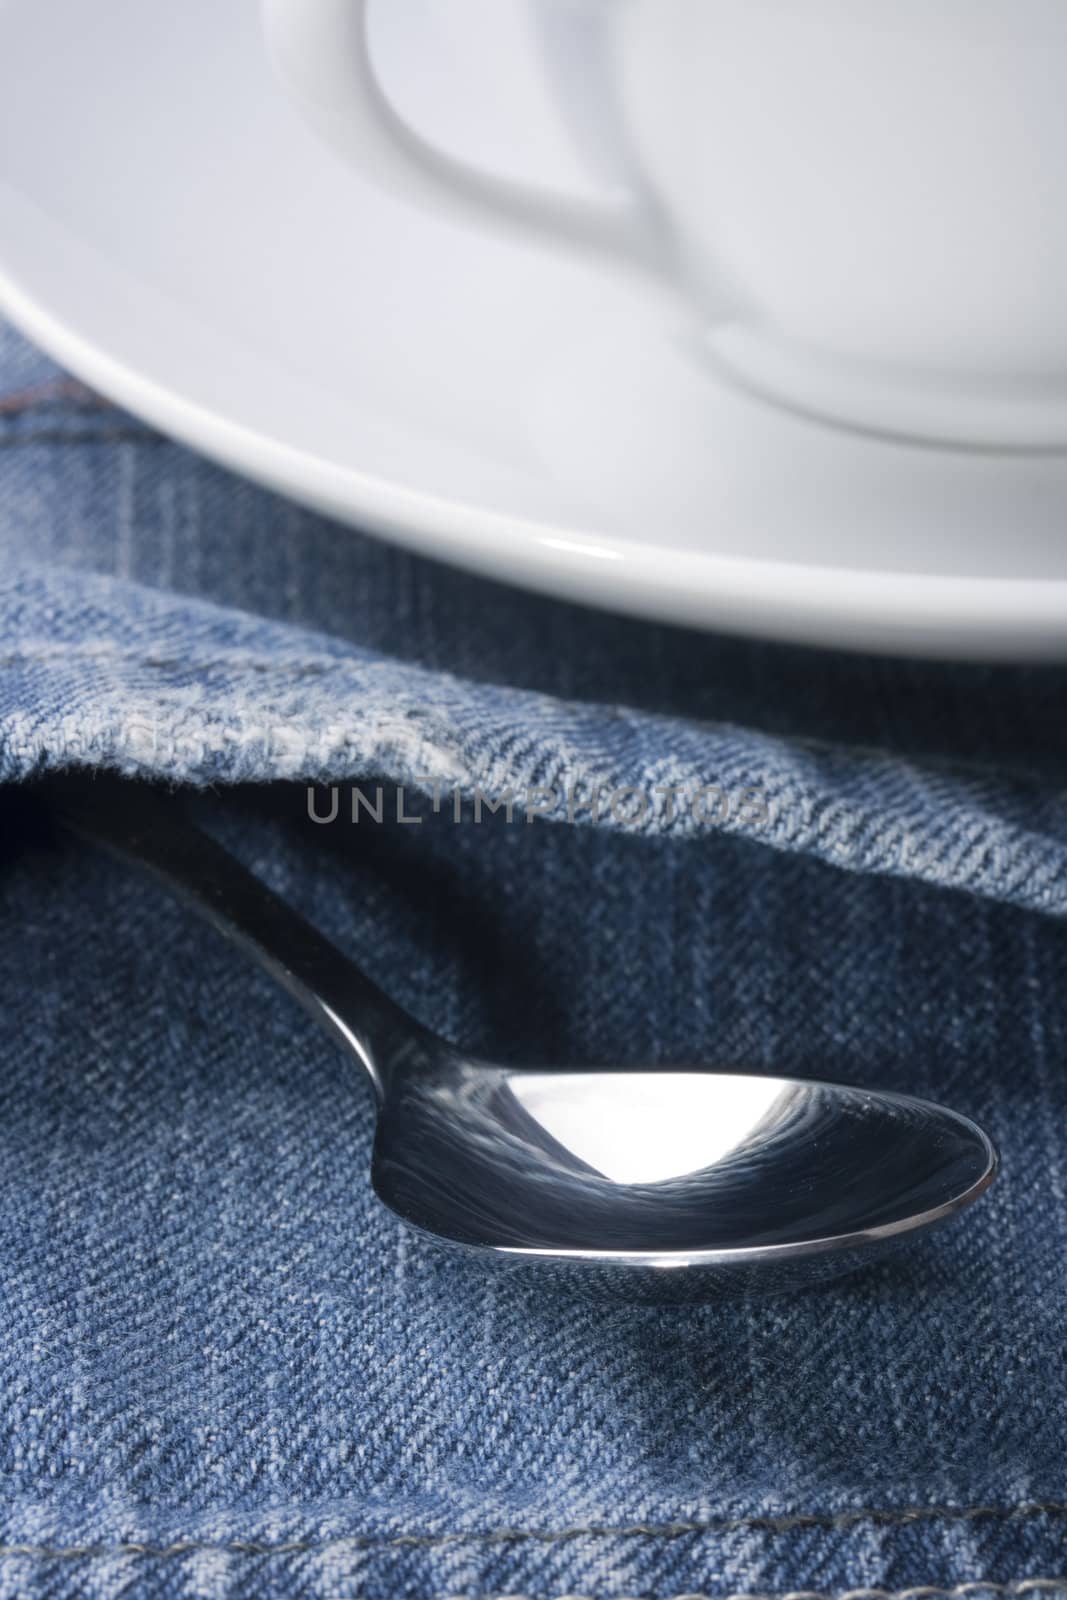 Spoon in a pocket of dark blue jeans trousers.